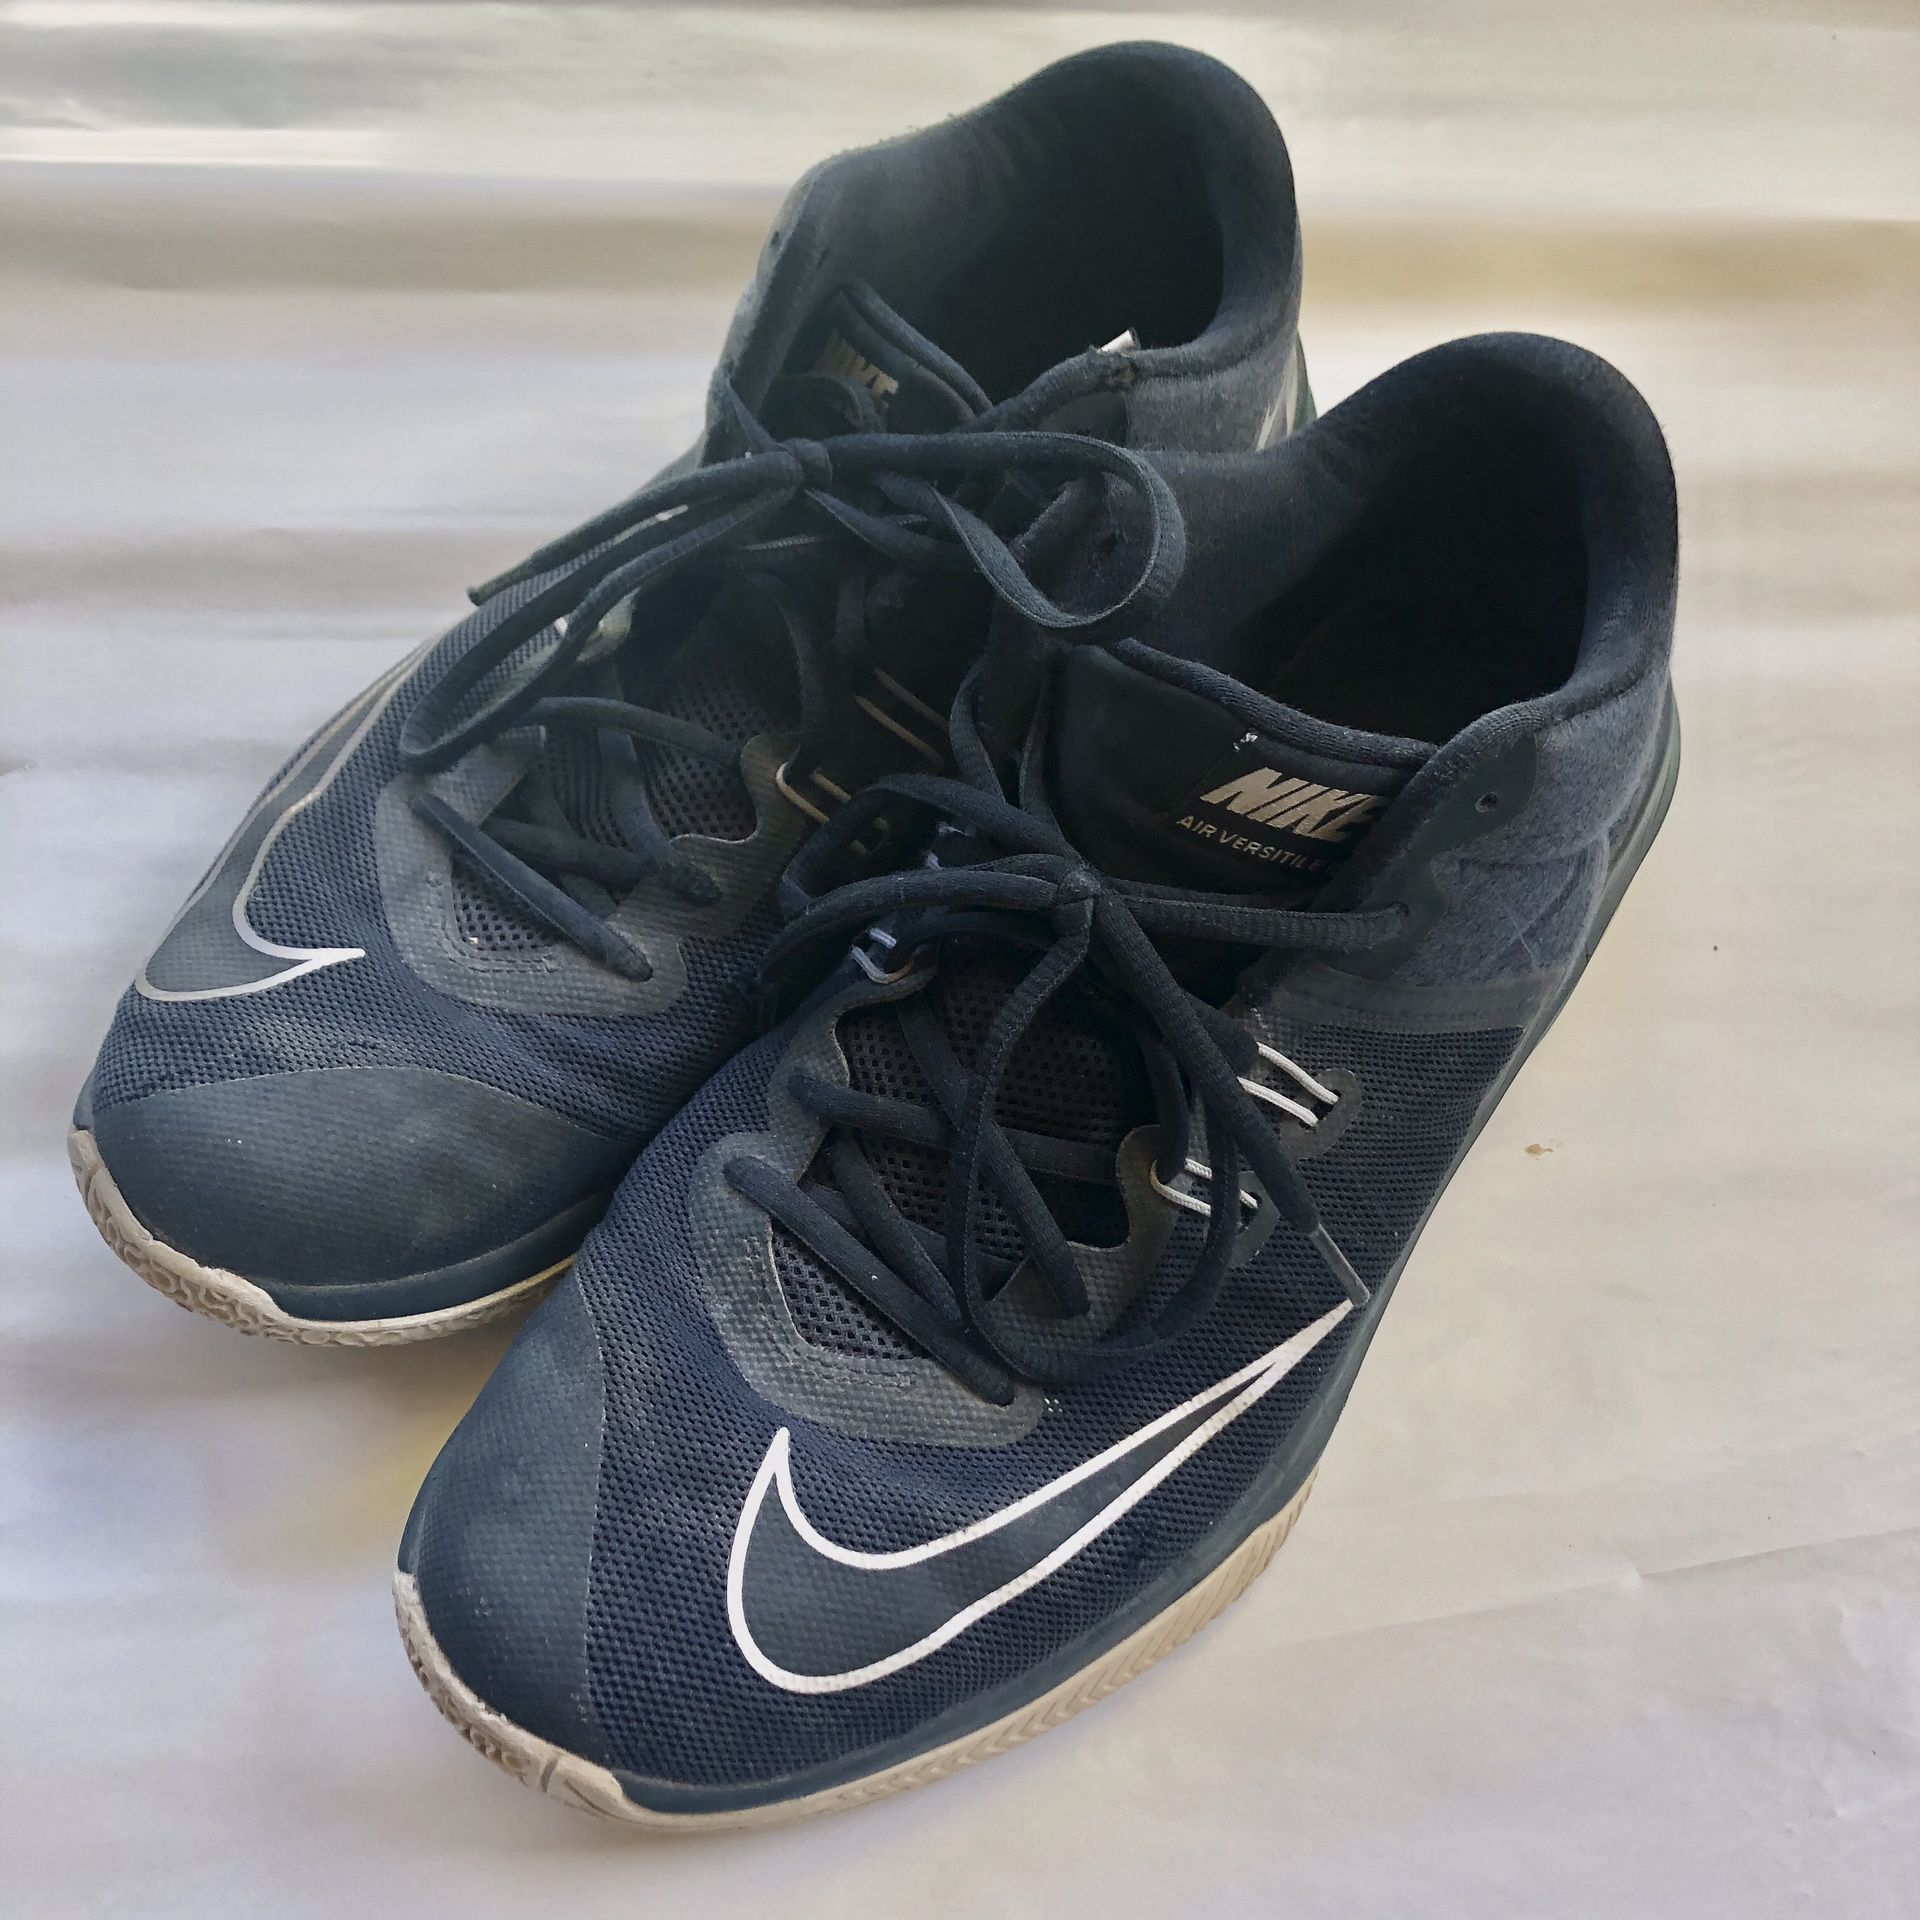 Men’s Nike Shoes (Size 11.5)